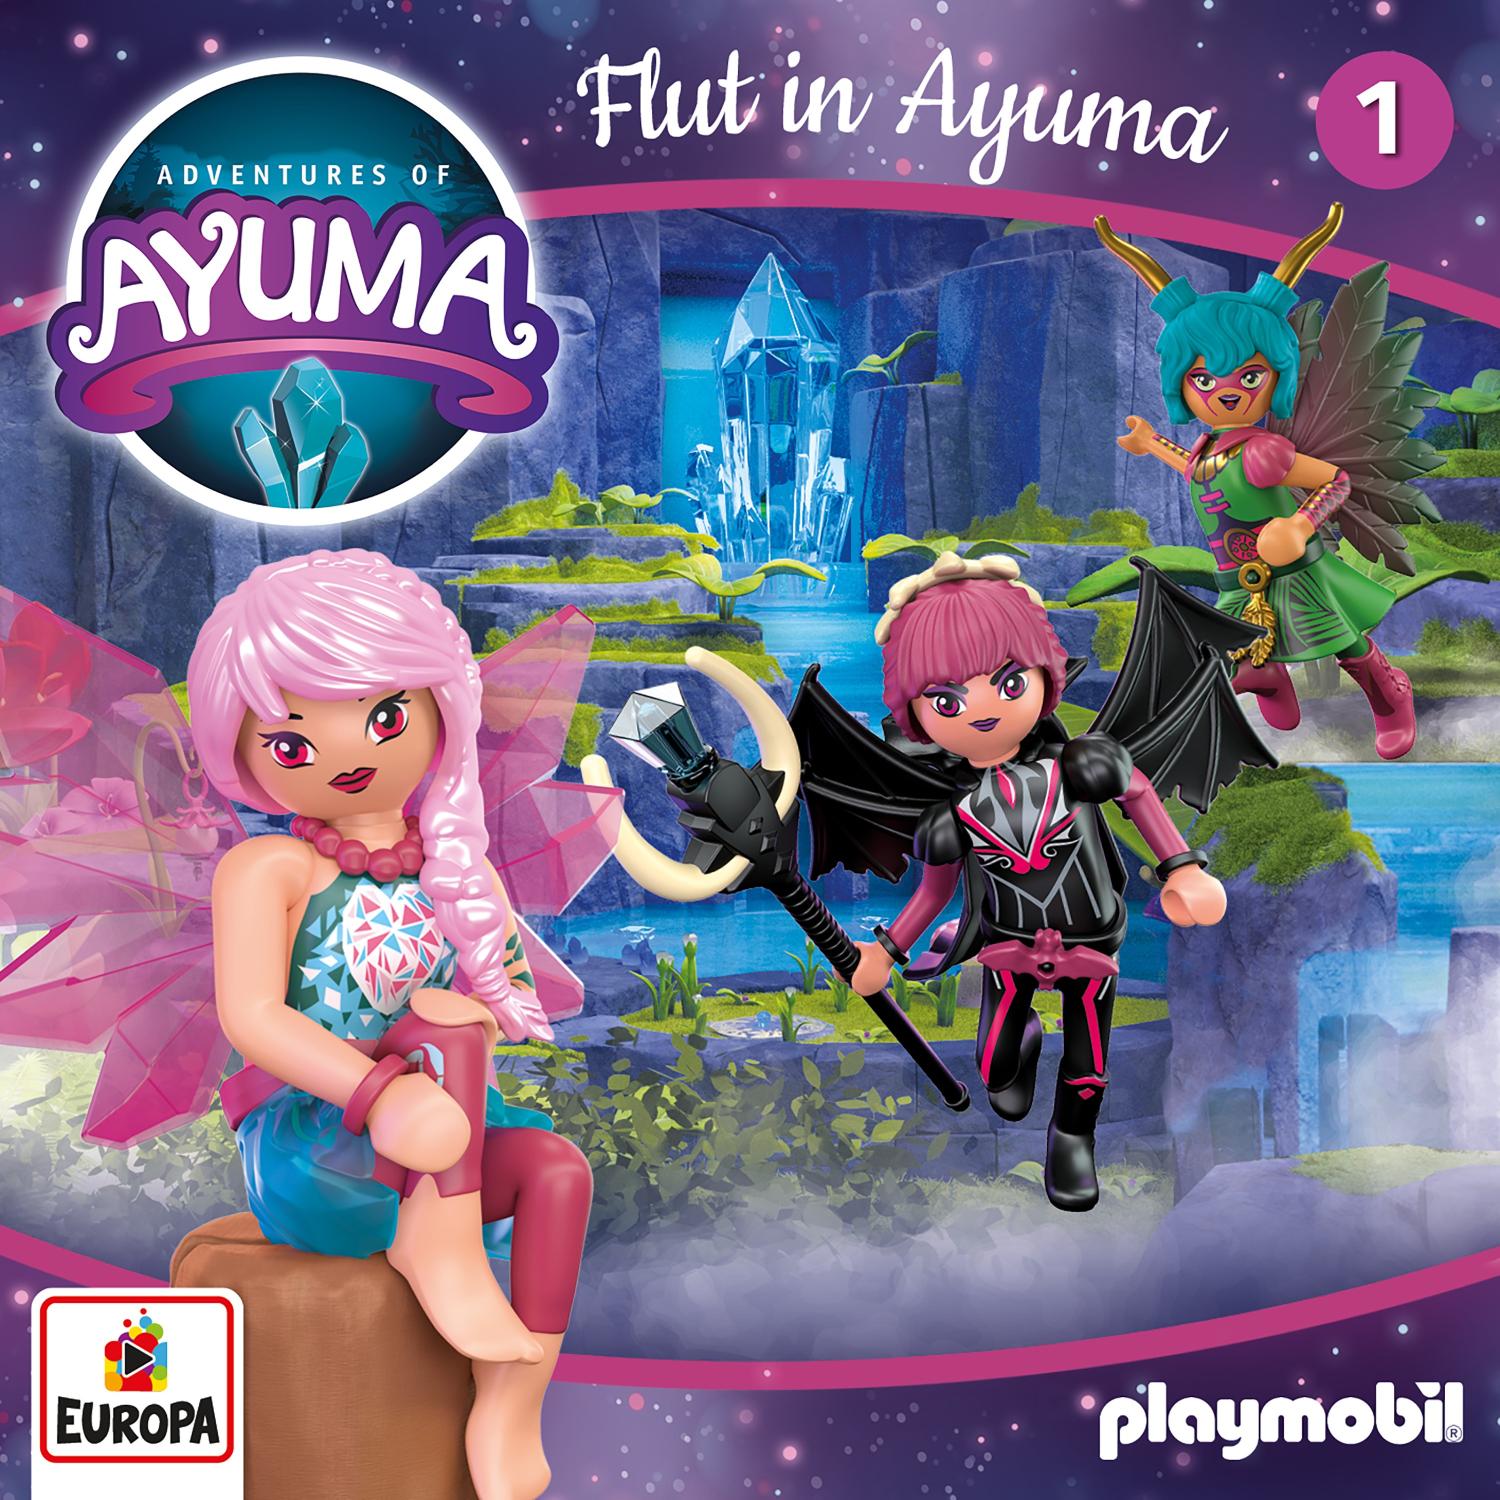 Adventures of Ayuma - Flut in Ayuma